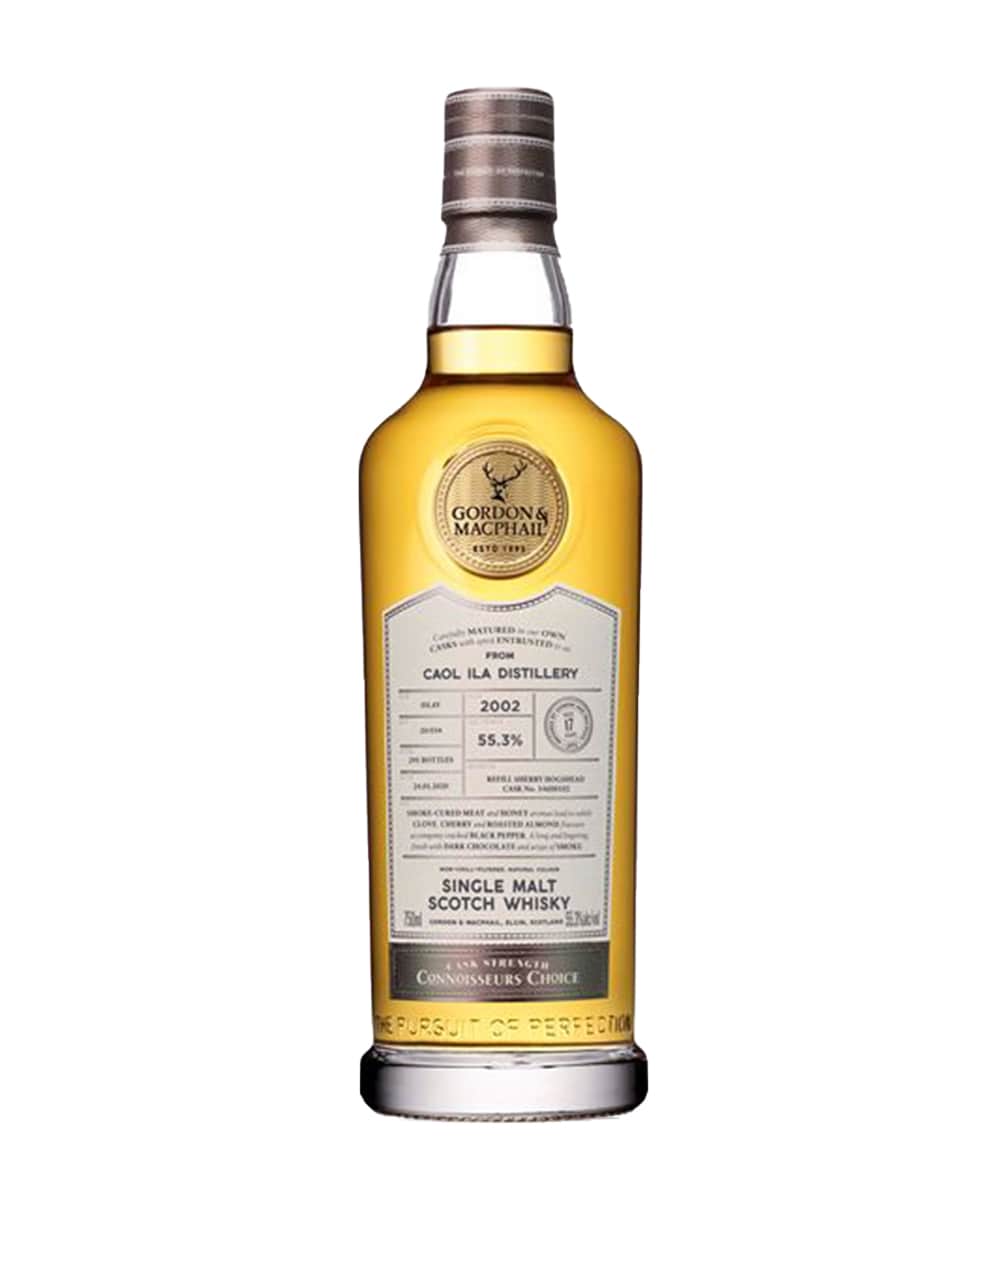 https://royalbatch.com/upload//products/1/gordon-macphail-caol-ila-distillery-17-year-old-single-malt-scotch-whisky_RoyalBatch_x9iOZBLlOA9D.jpg